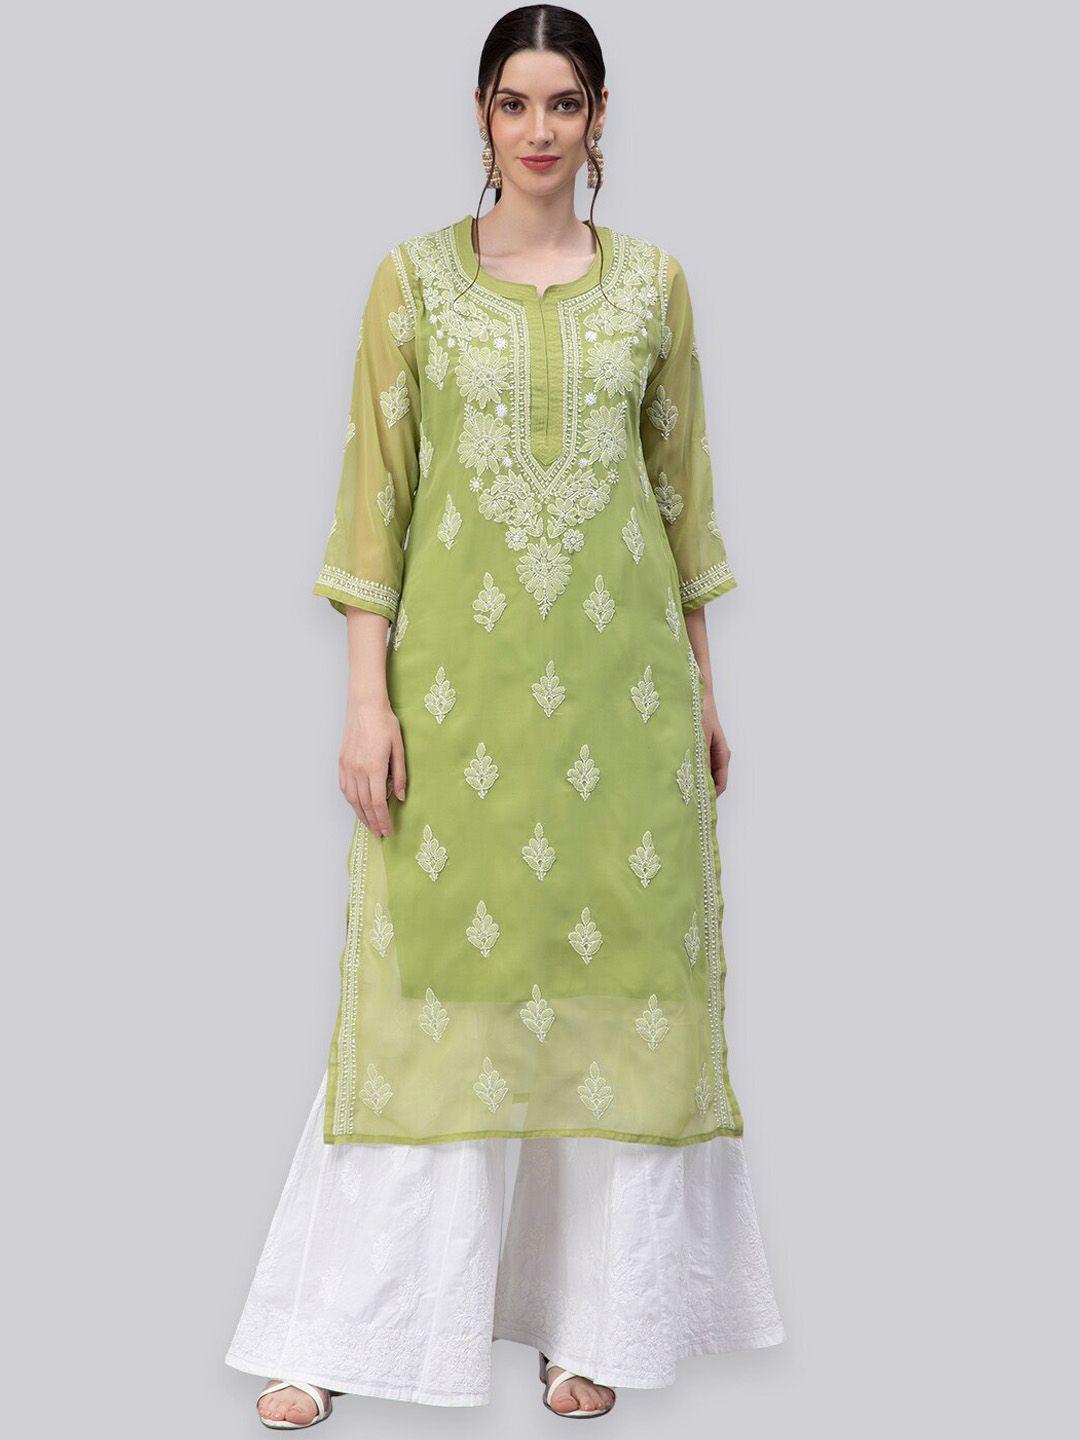 seva-chikan-women-green-ethnic-motifs-embroidered-flared-sleeves-chikankari-handloom-georgette-kurta